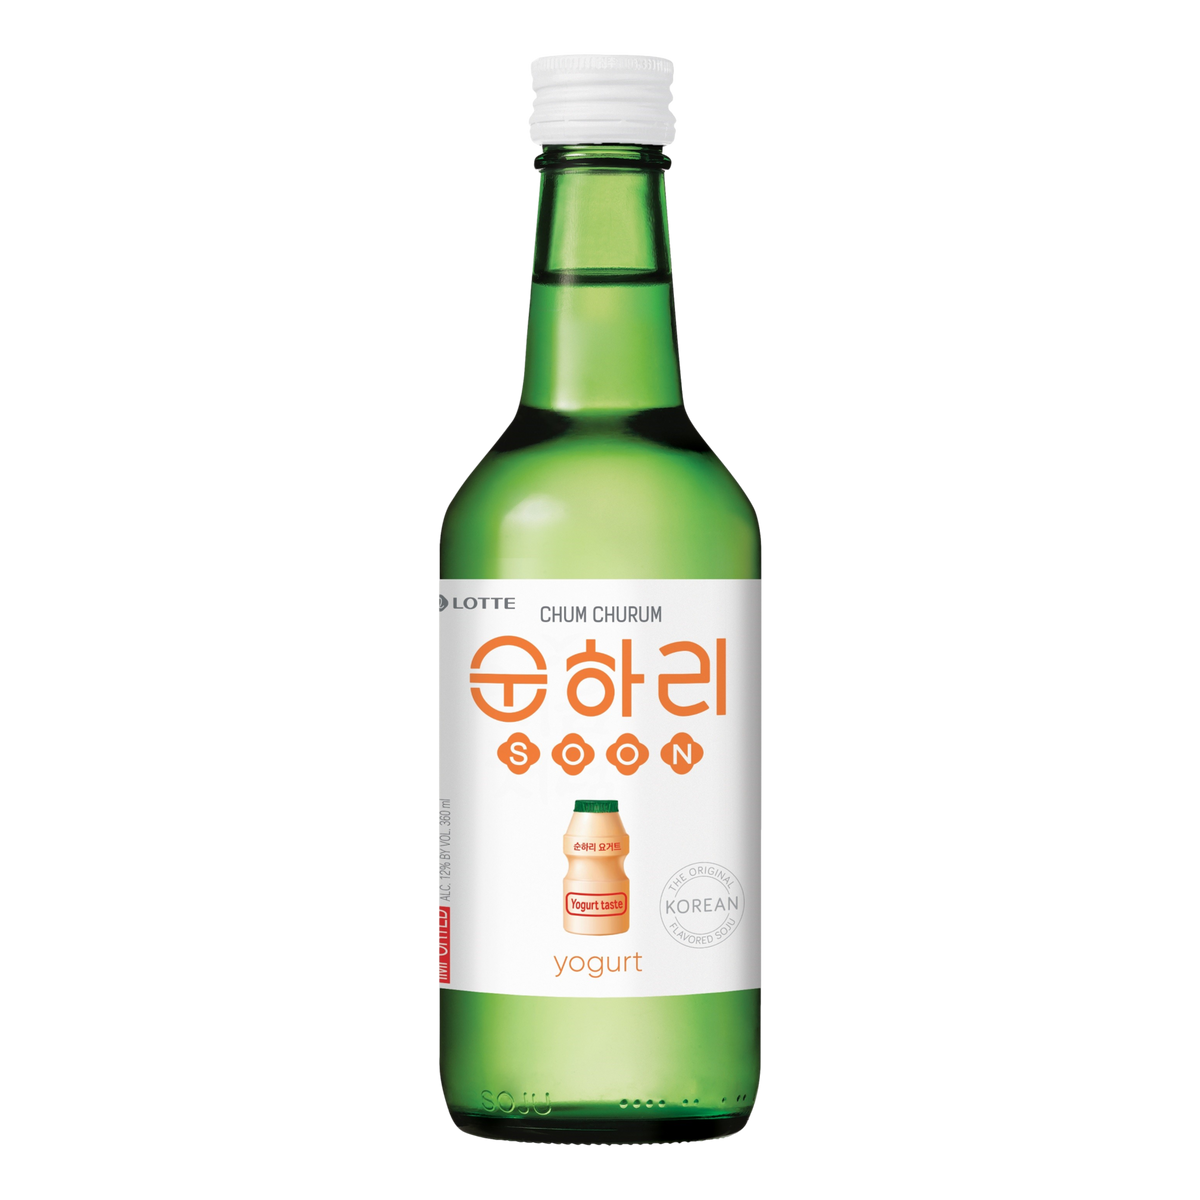 Lotte Chum Churum Soonhari Yogurt Soju 360ml Bottle 4 Pack